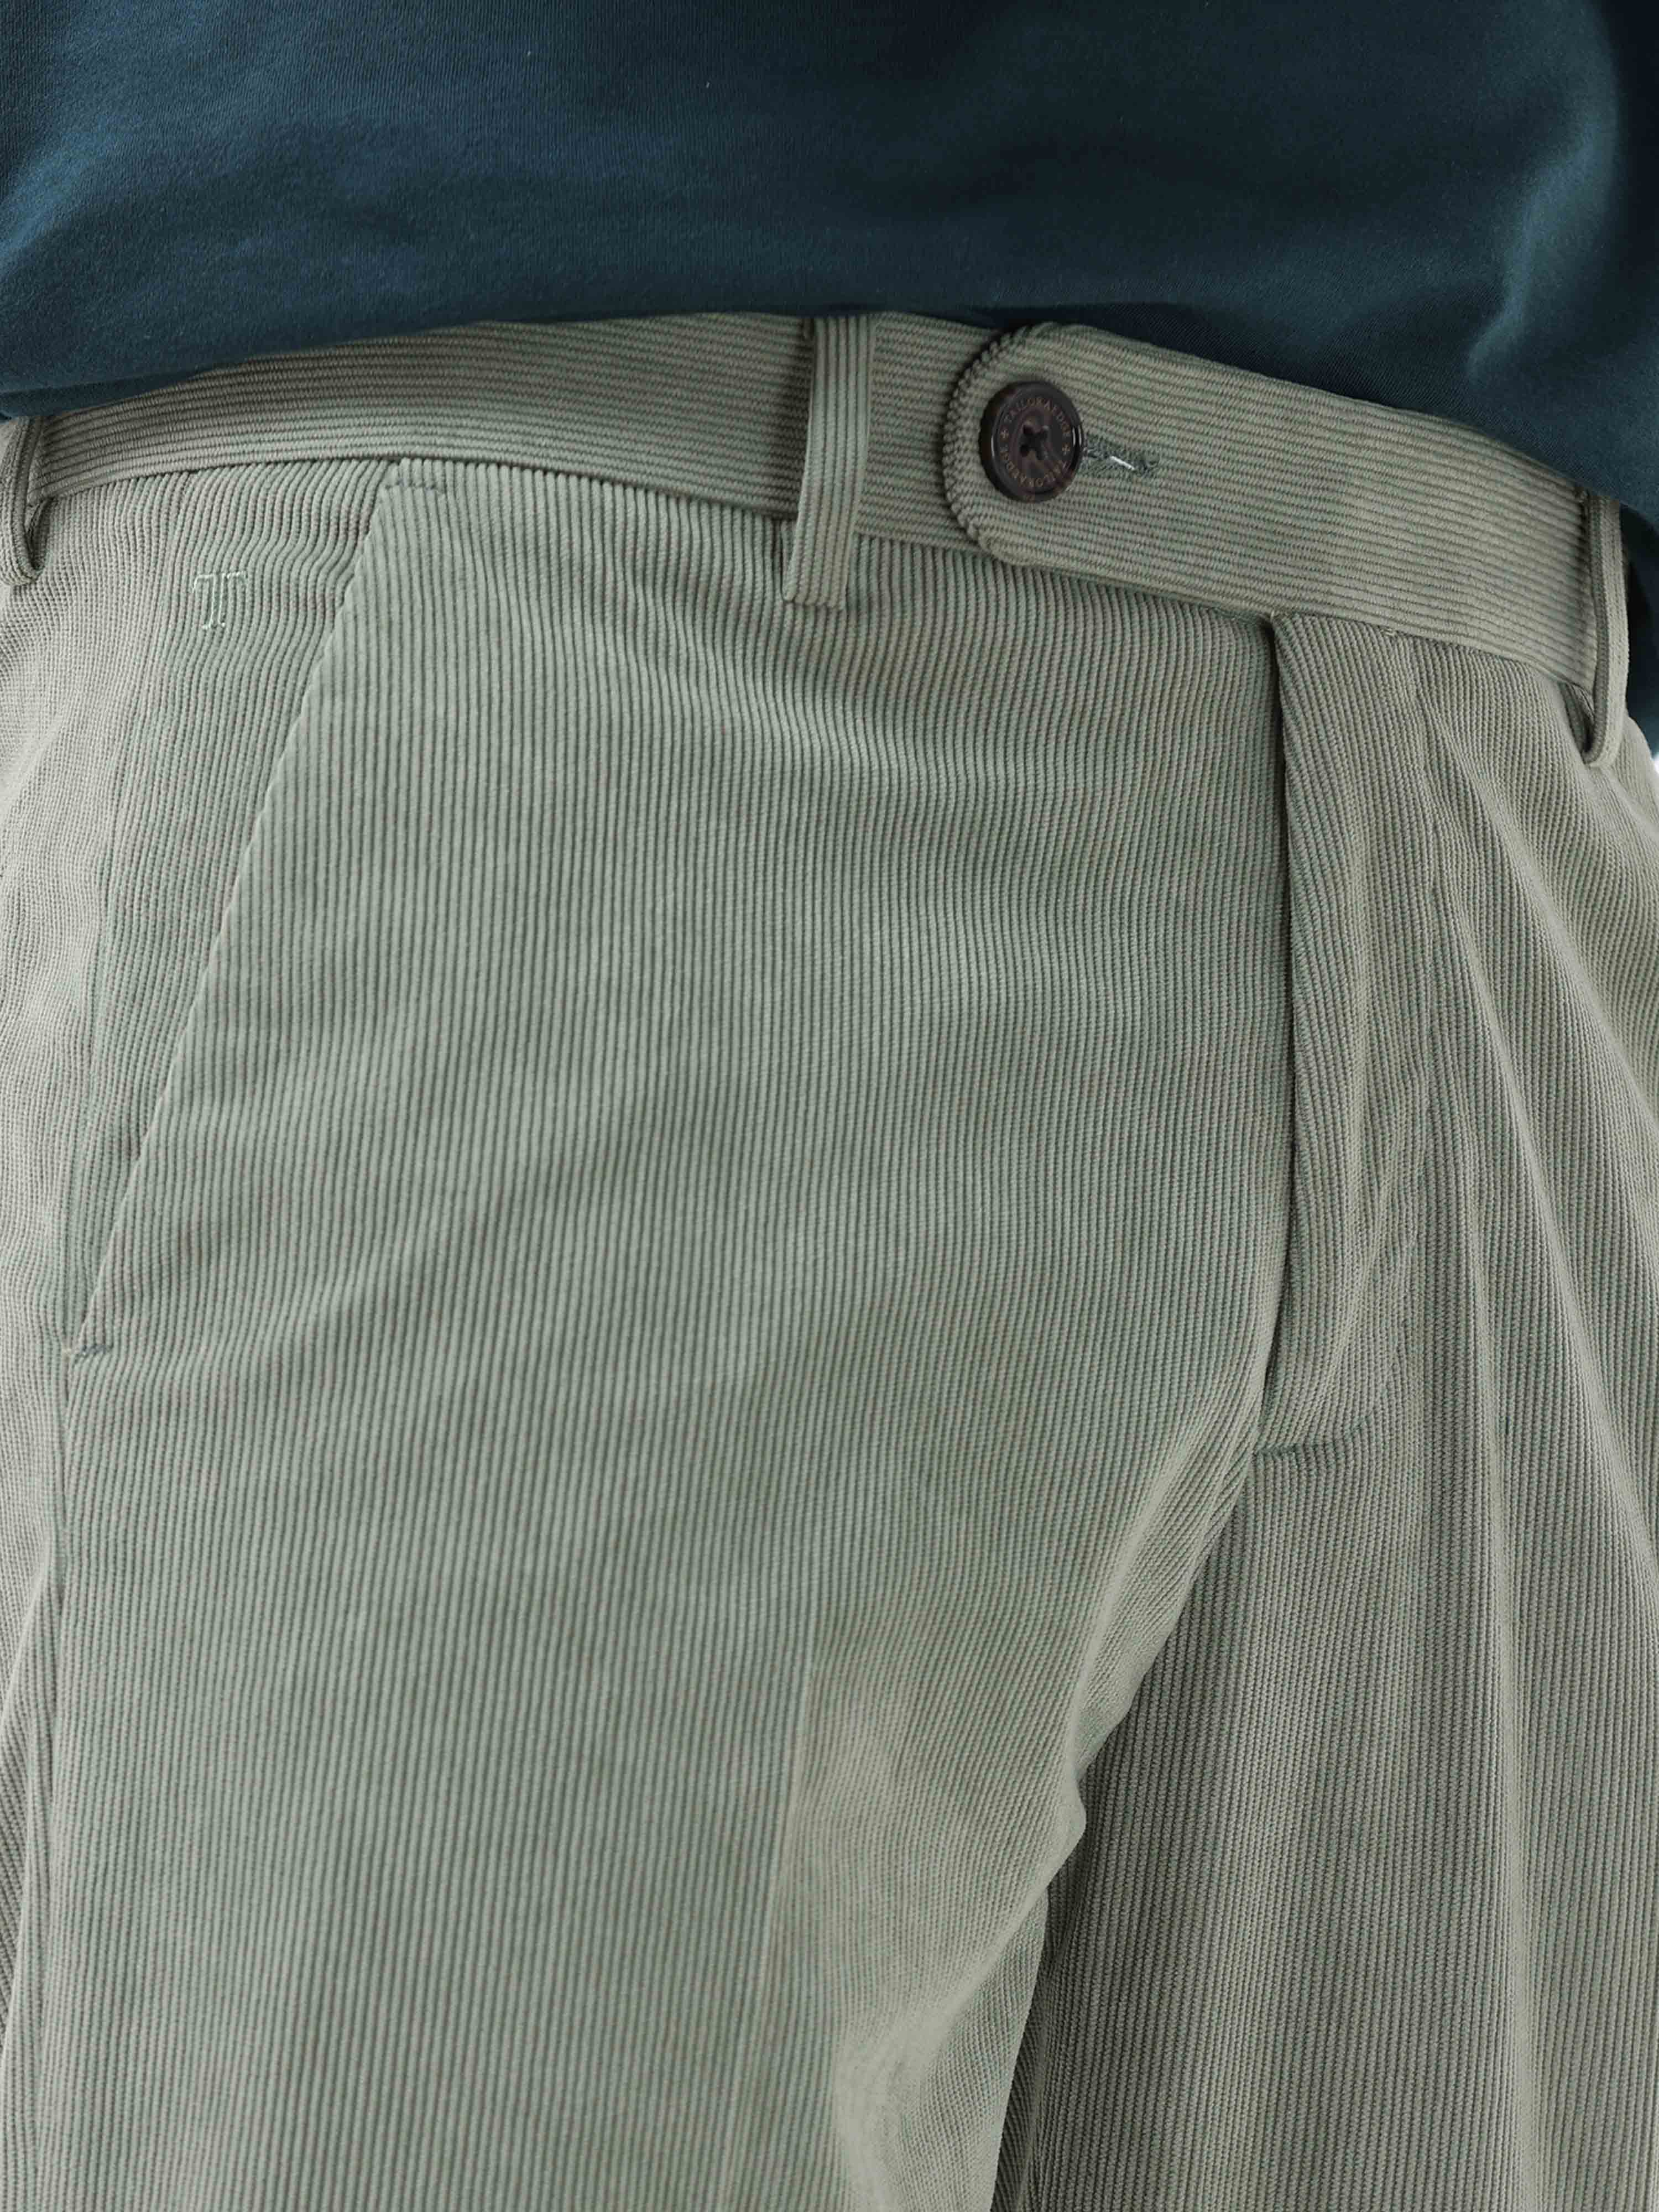 Corduroy trousers Slim Fit - Light brown - Men | H&M IN